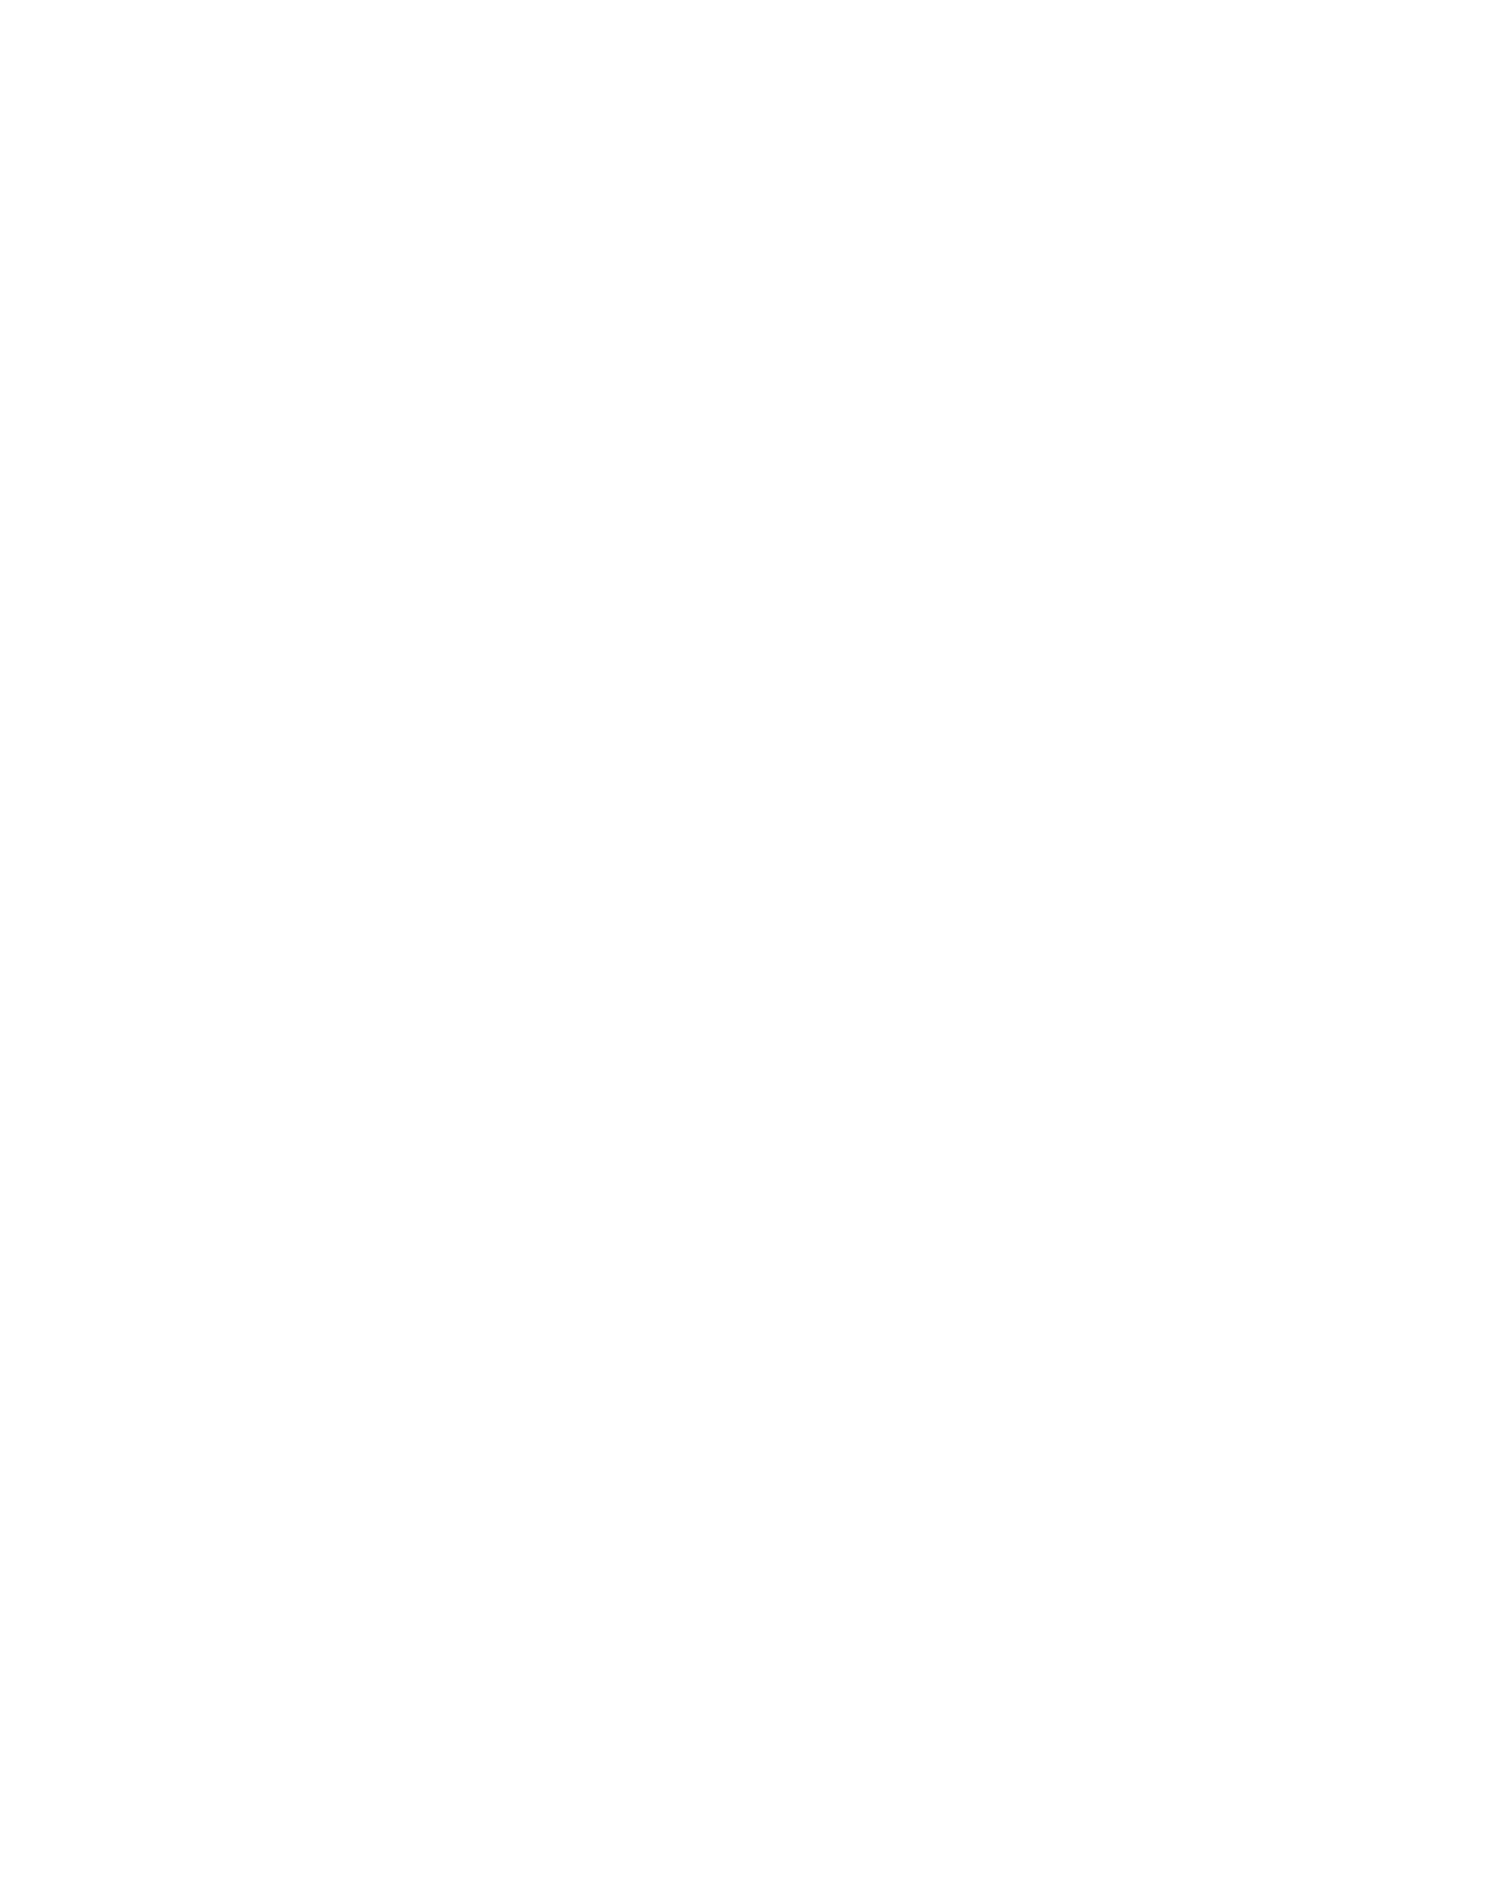 The London School of Facial Aesthetics